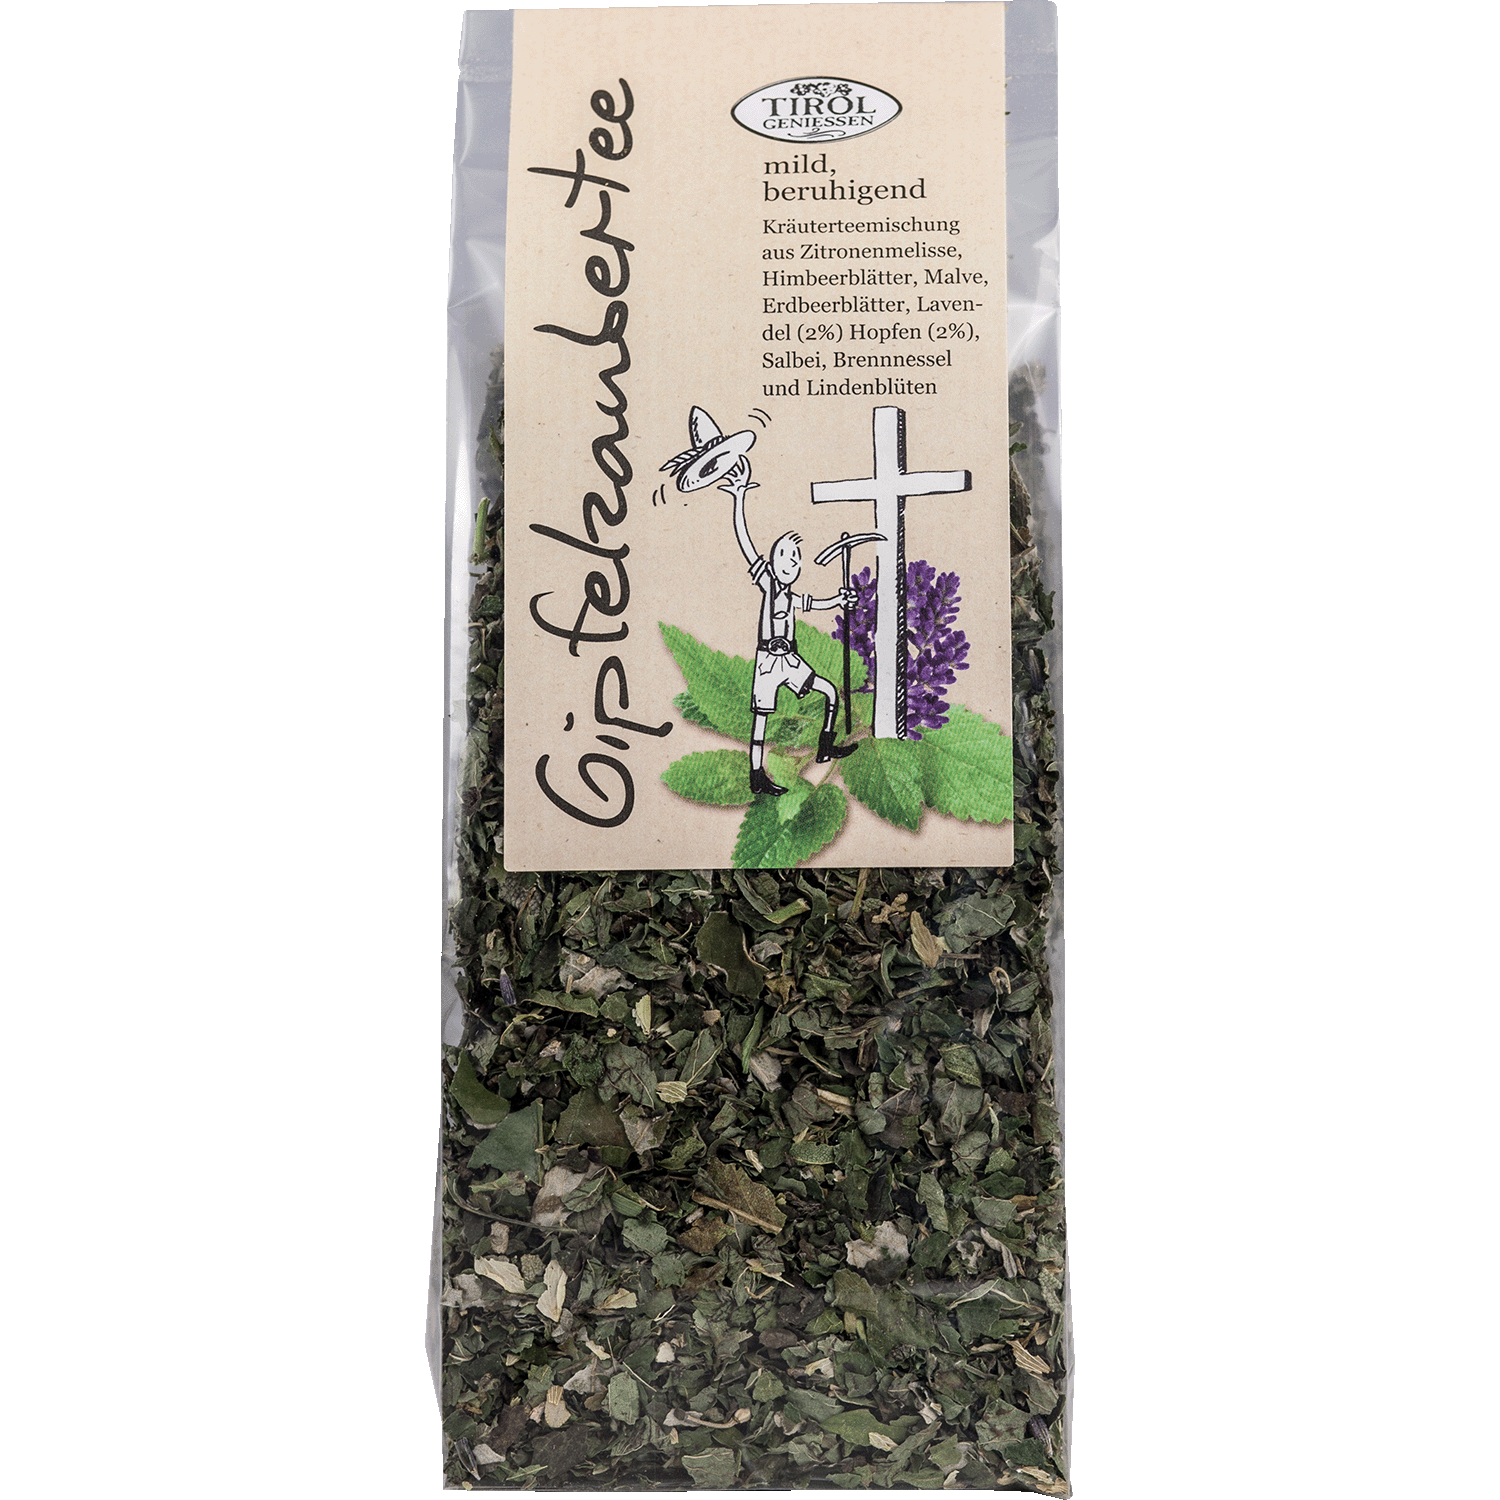 Summit Herbal Tea from Austria from Tirol Geniessen